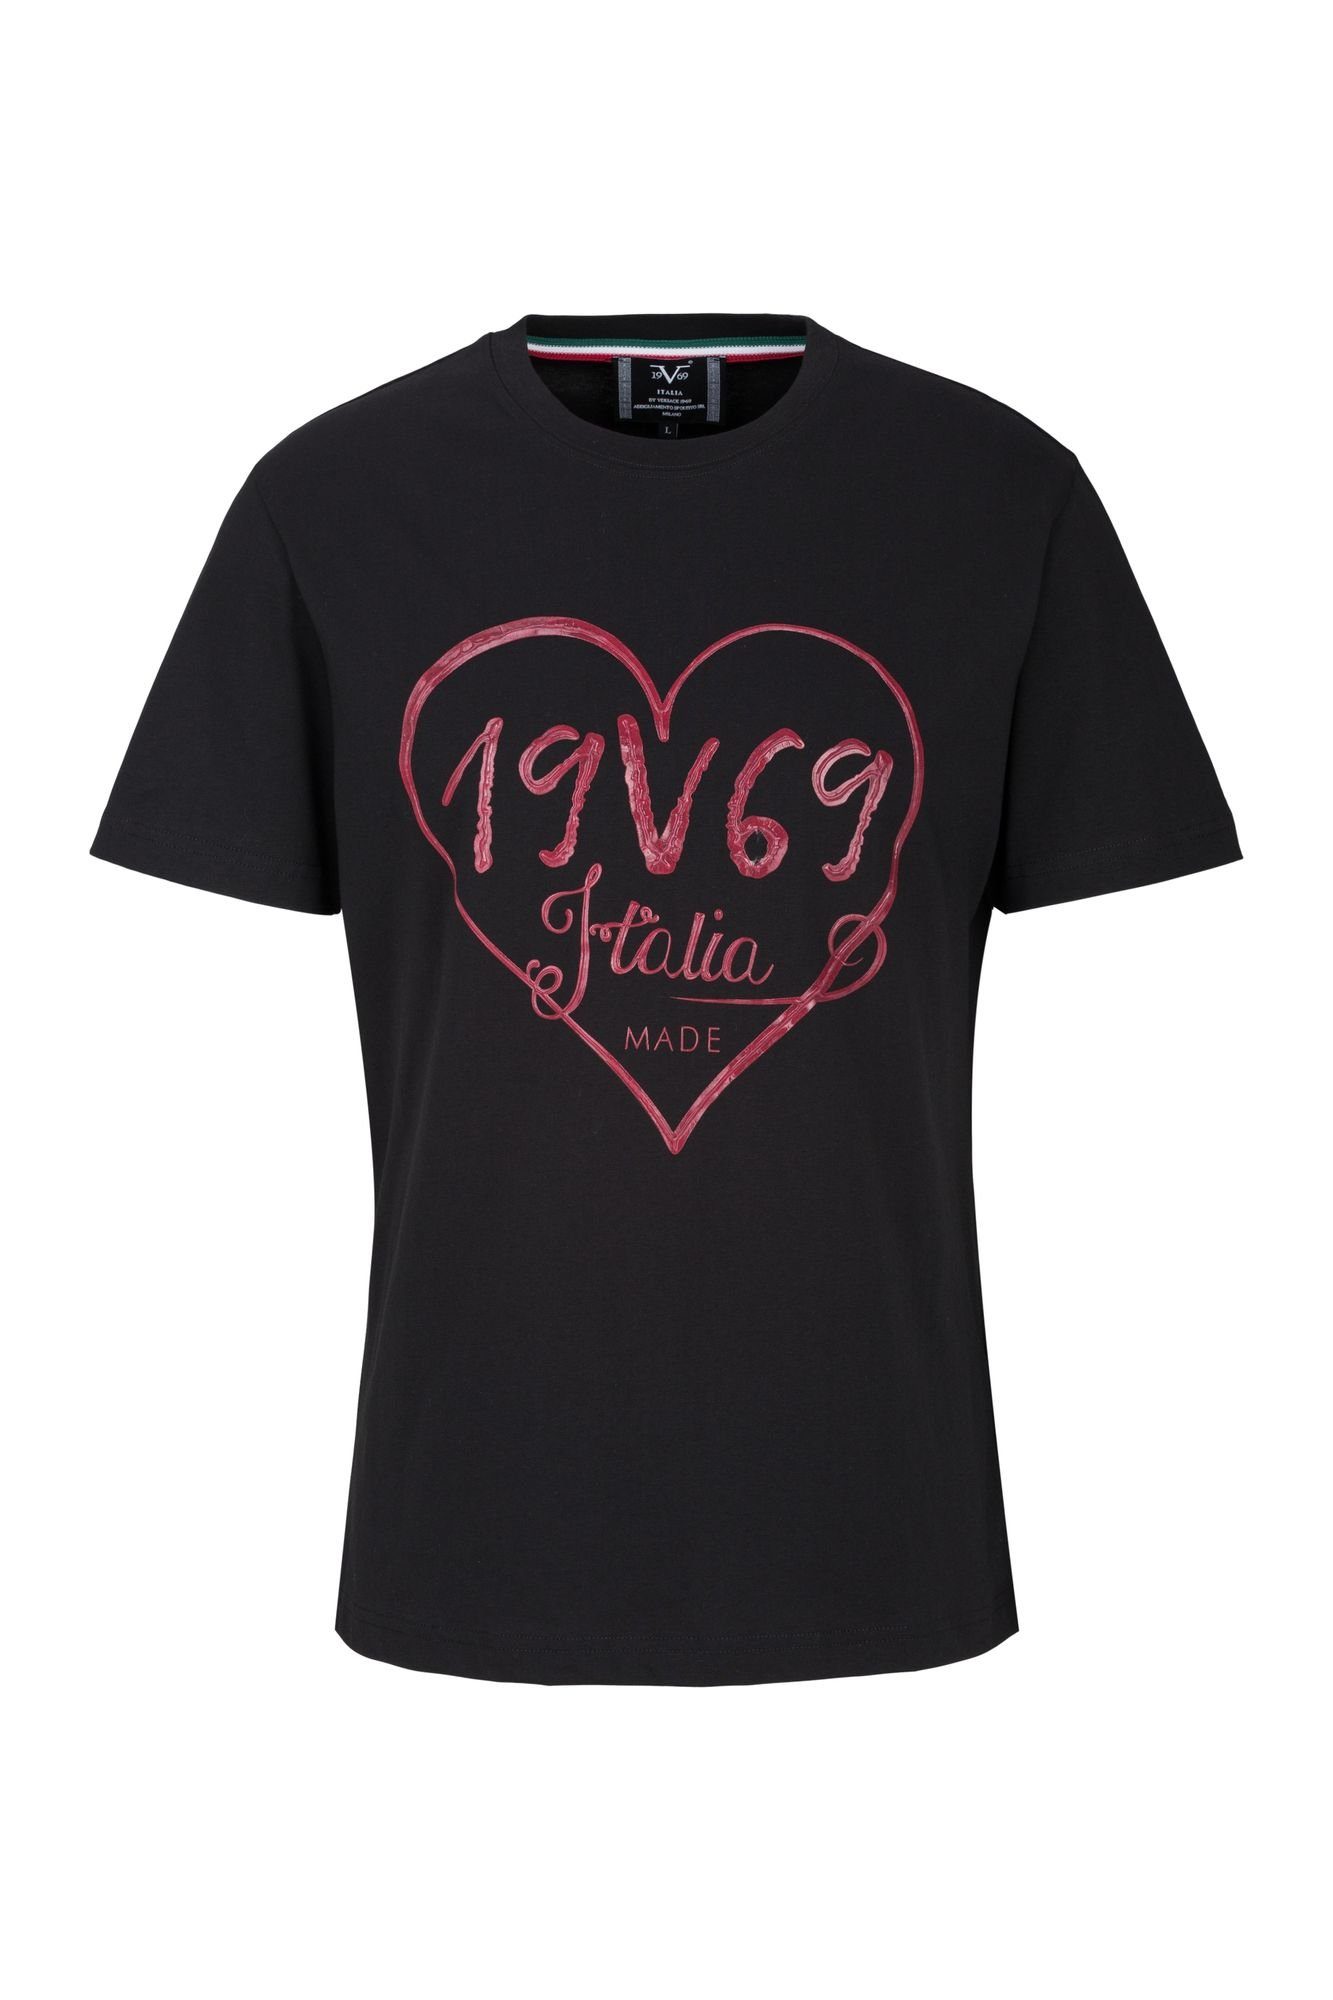 19V69 Italia by Versace Rundhalsshirt by Versace Sportivo SRL - Dario